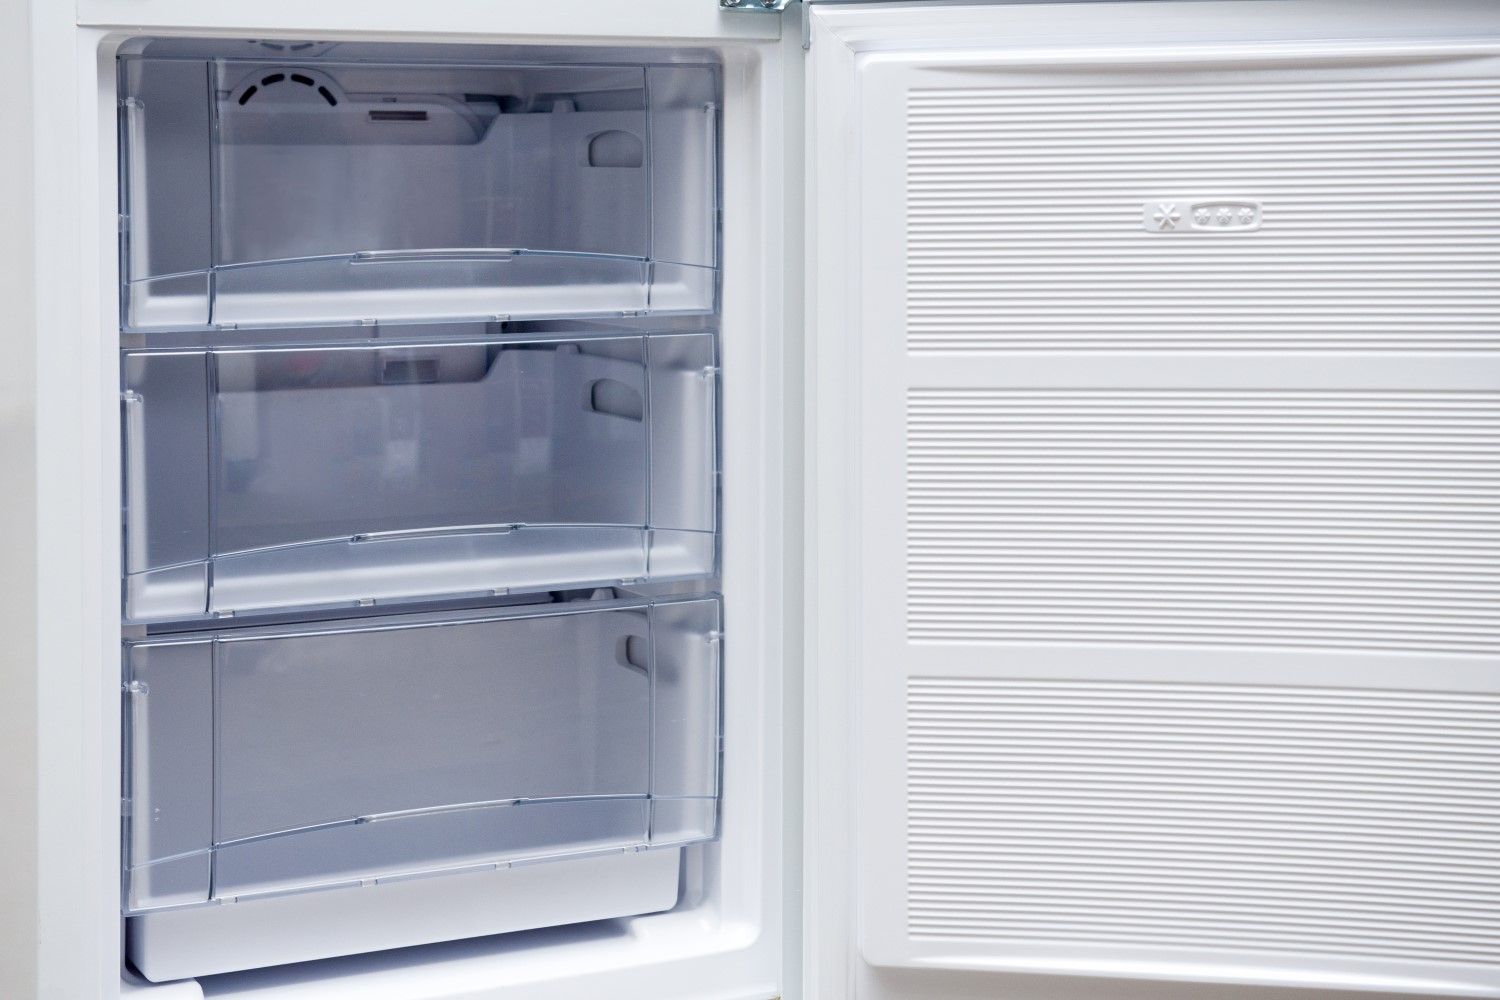 Сайт холодильник ру рязань